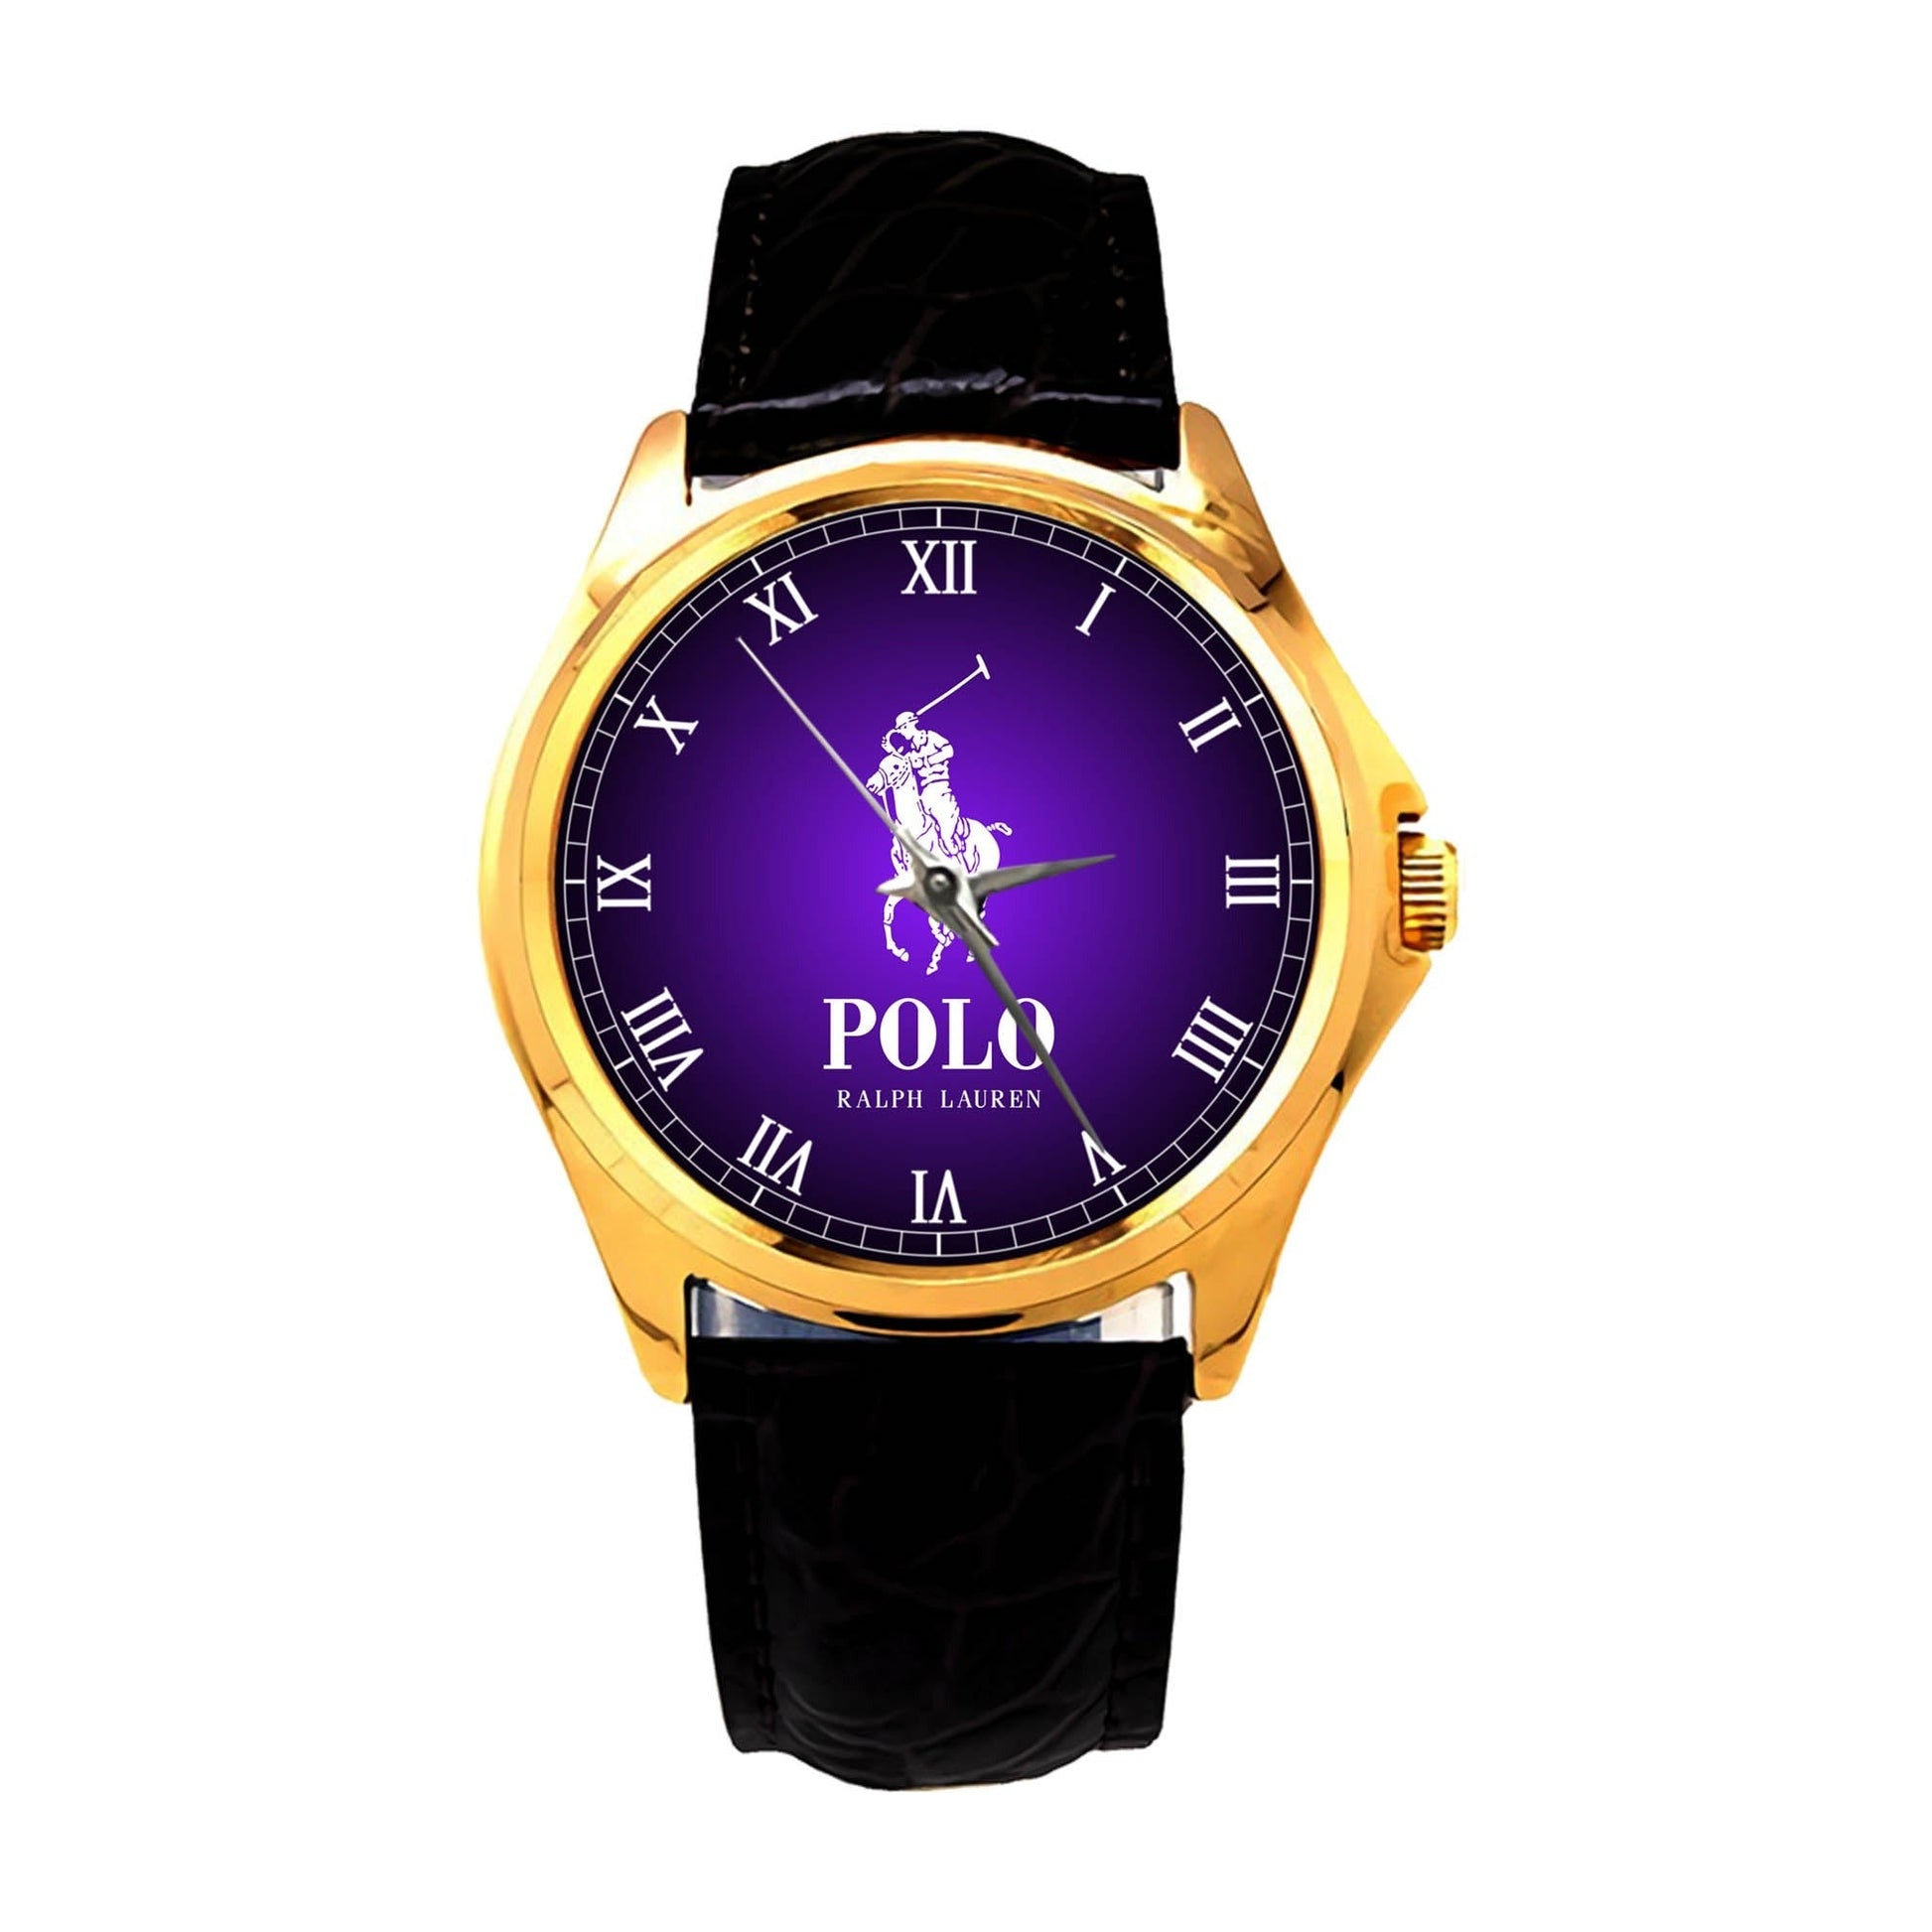 Polo Ralph Lauren Watches KP625